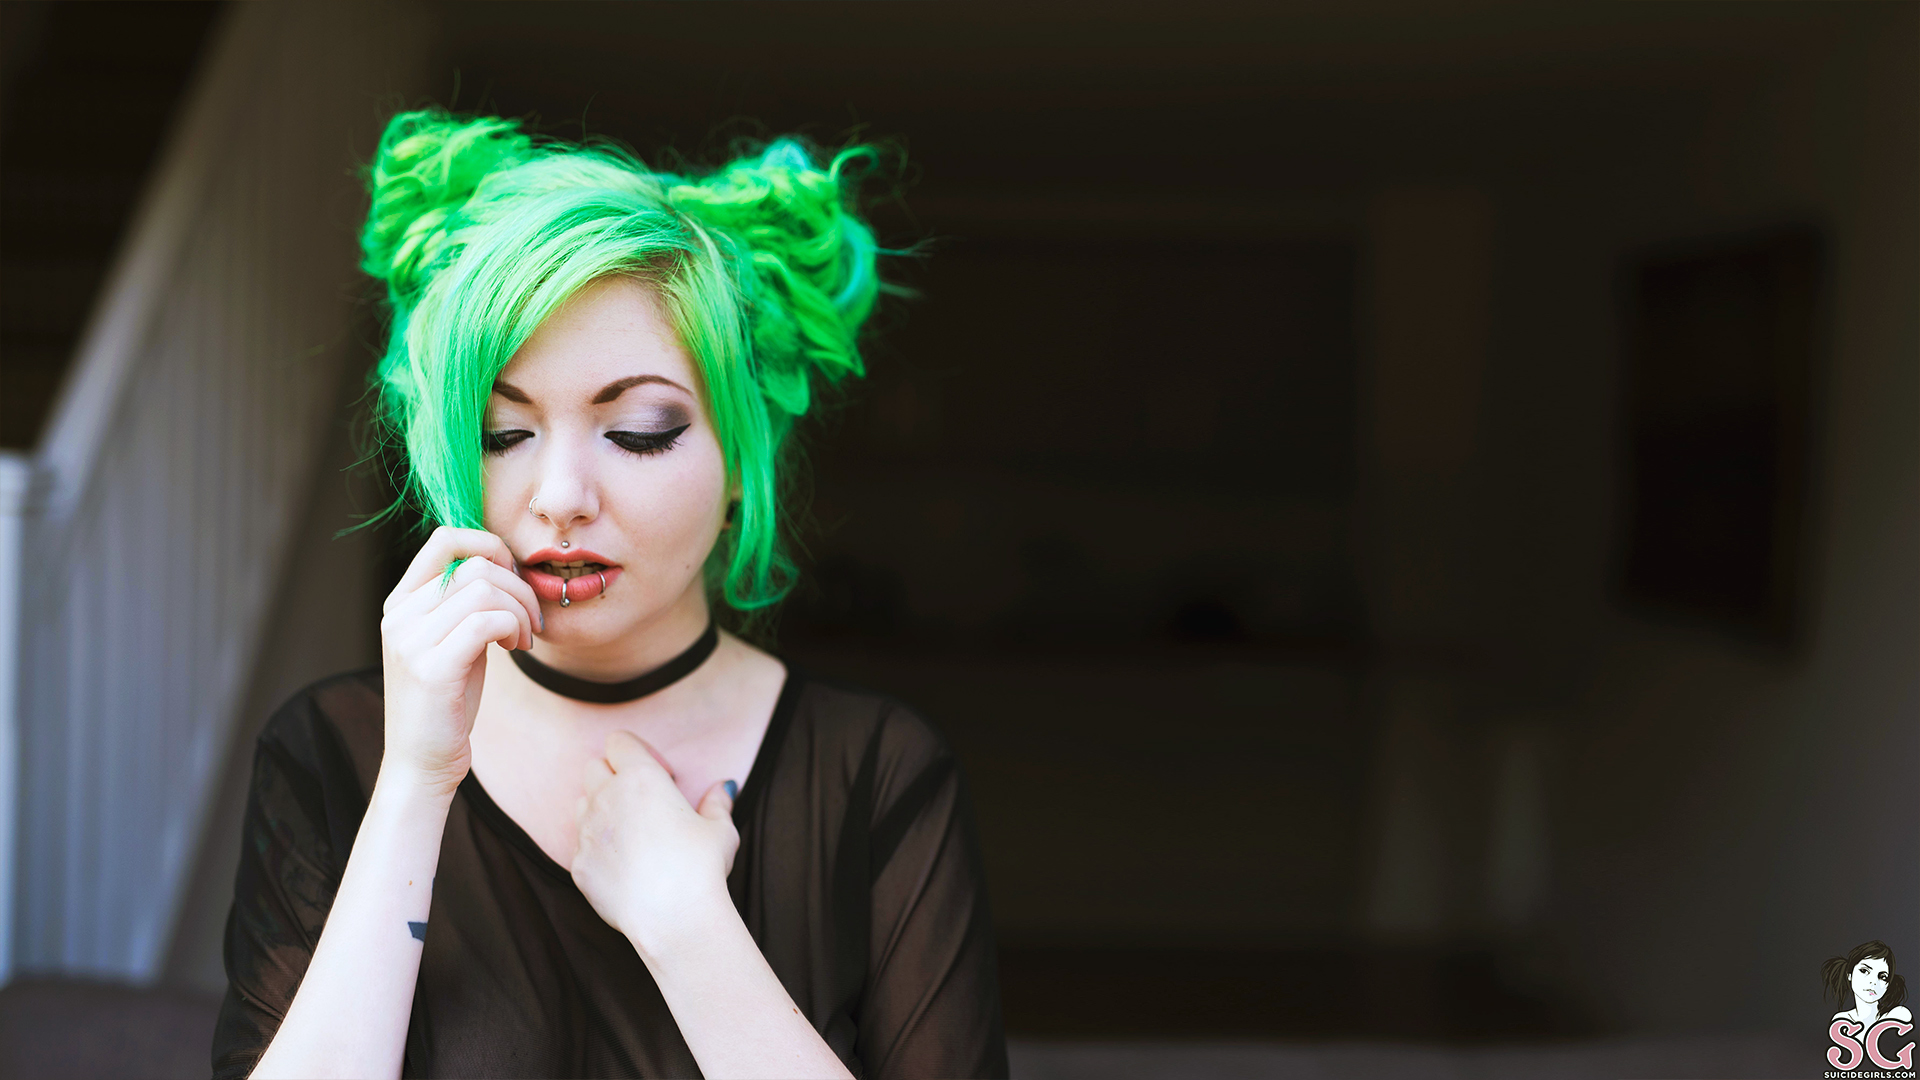 People 1920x1080 Suicide Girls Nayru Suicide green hair pornstar dyed hair women pierced lip face tattoo